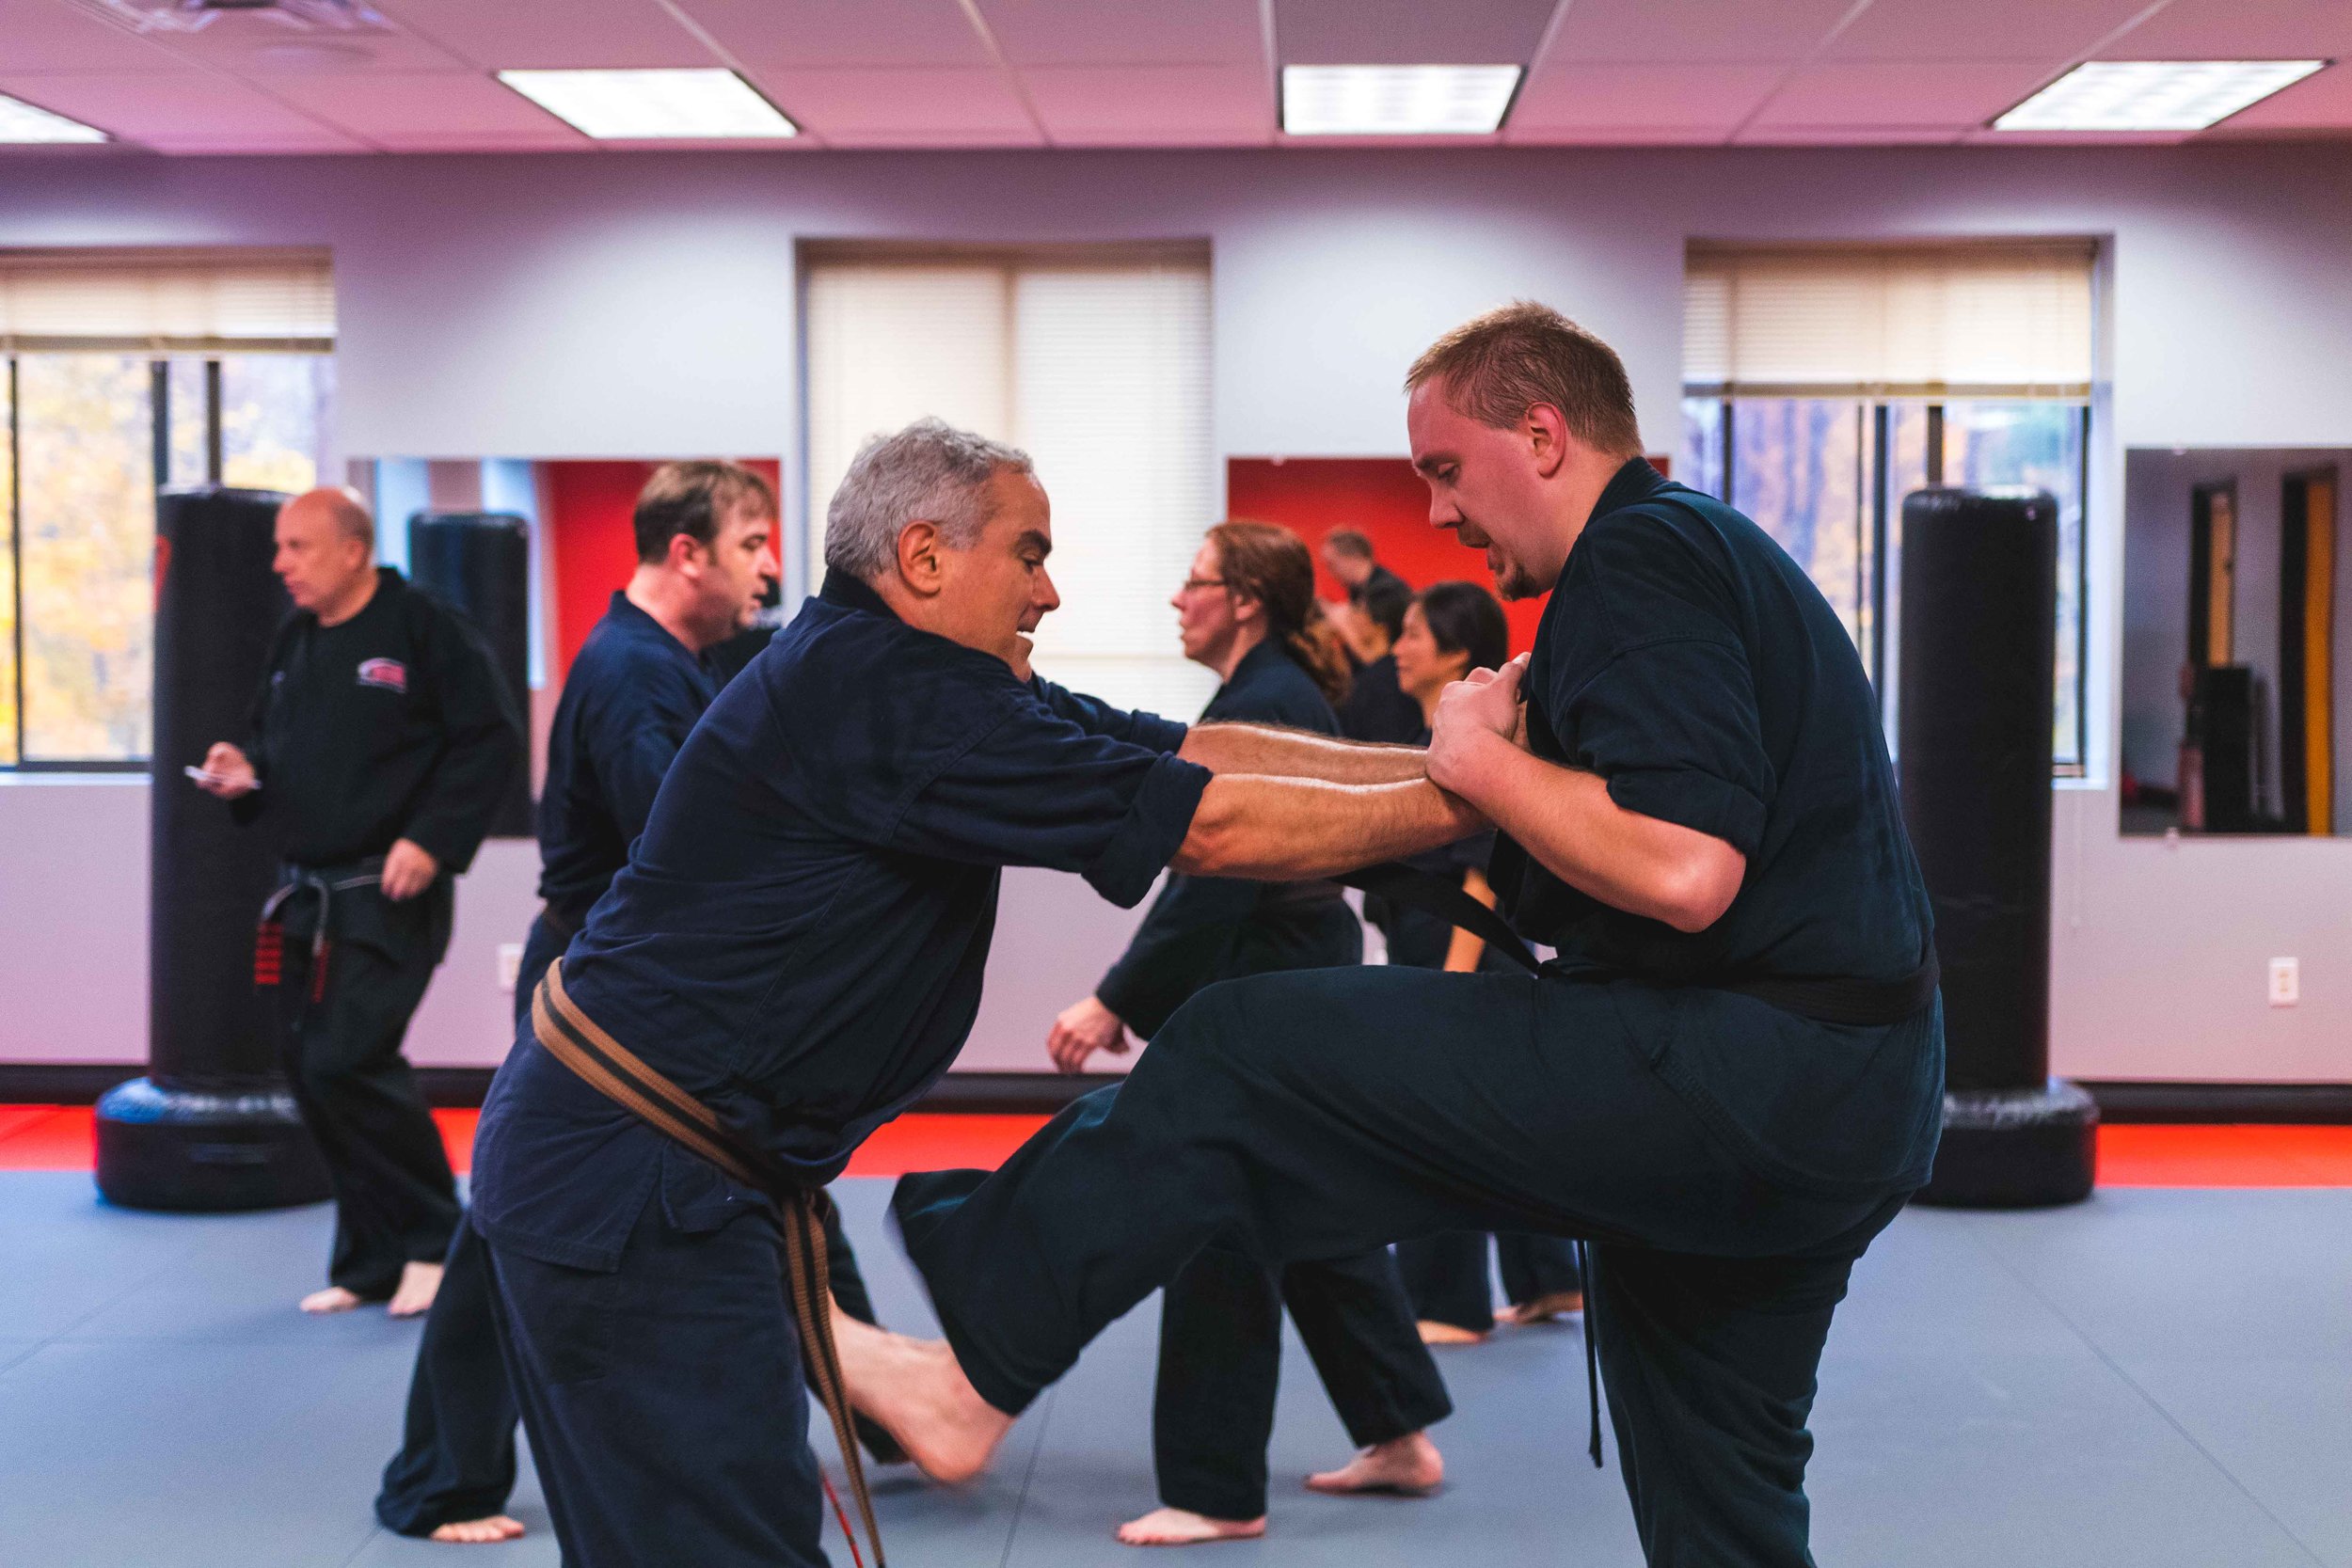 Beginner Martial Arts Classes for Adult Men and Women in Bedford Massachusetts at Callahan's Karate.jpg